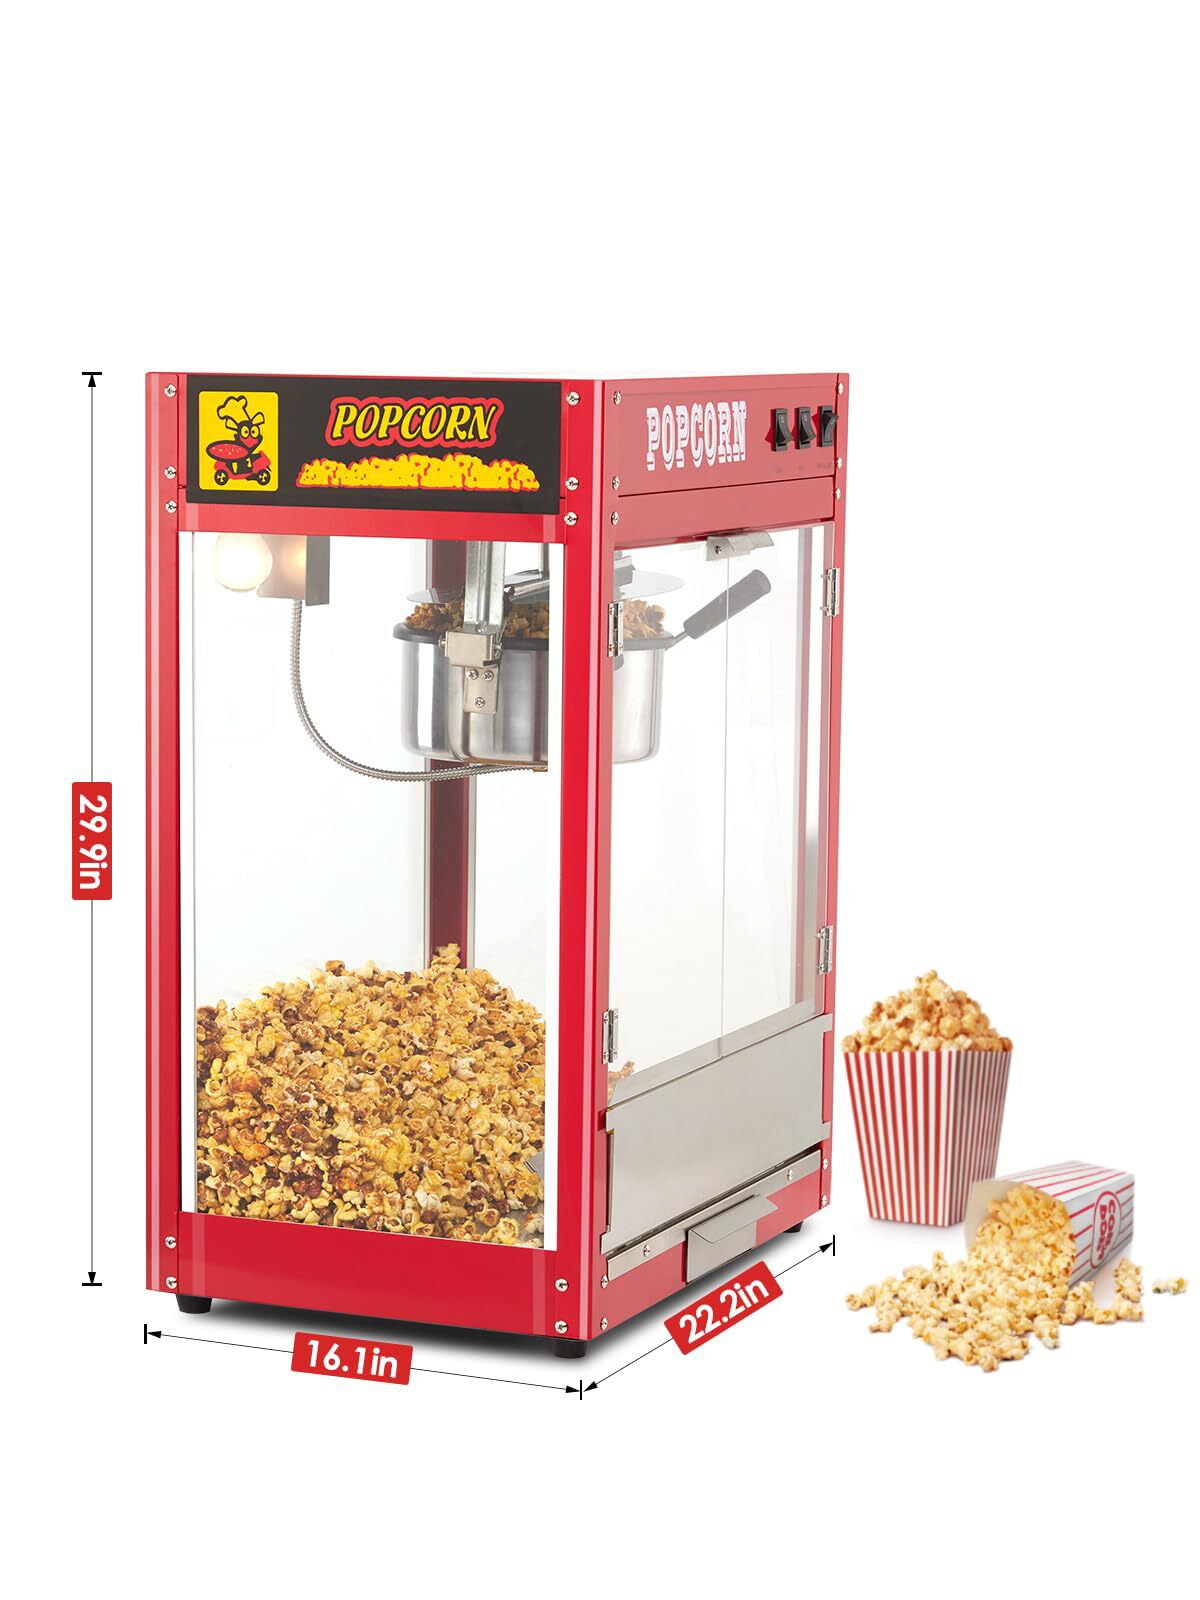 Babevy 6 Oz. Hot Air Popcorn Popper